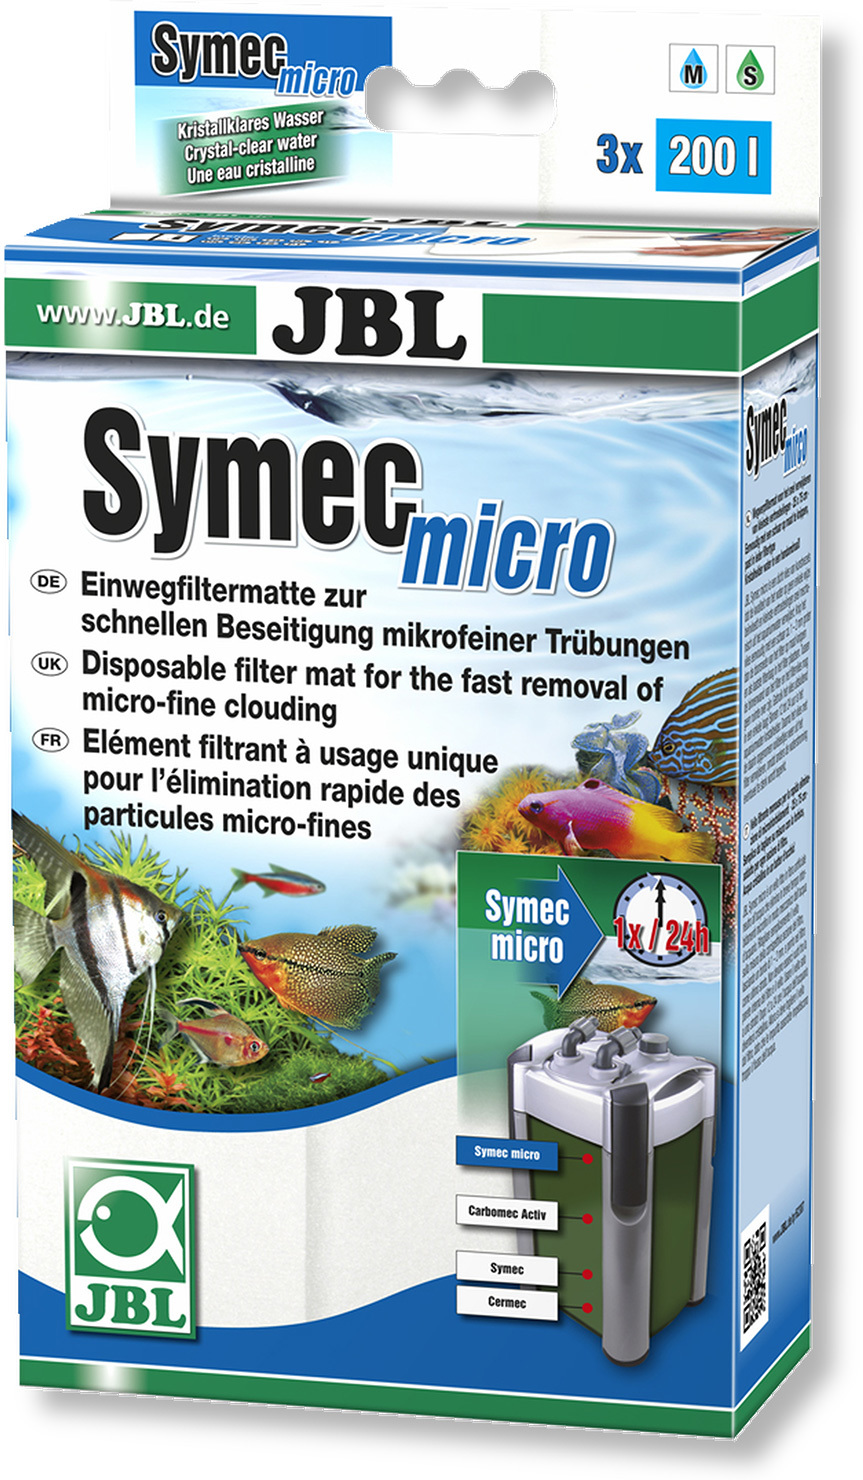 JBL SymecMicro material filtrant